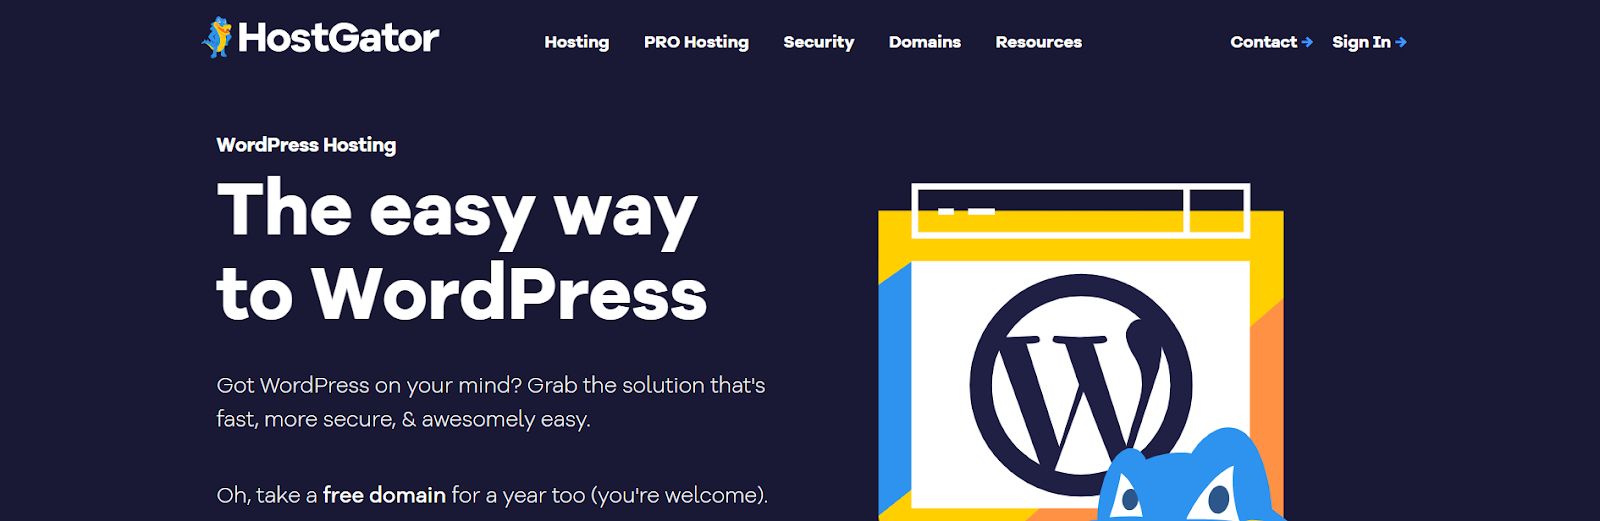 HostGator WordPress hosting page.